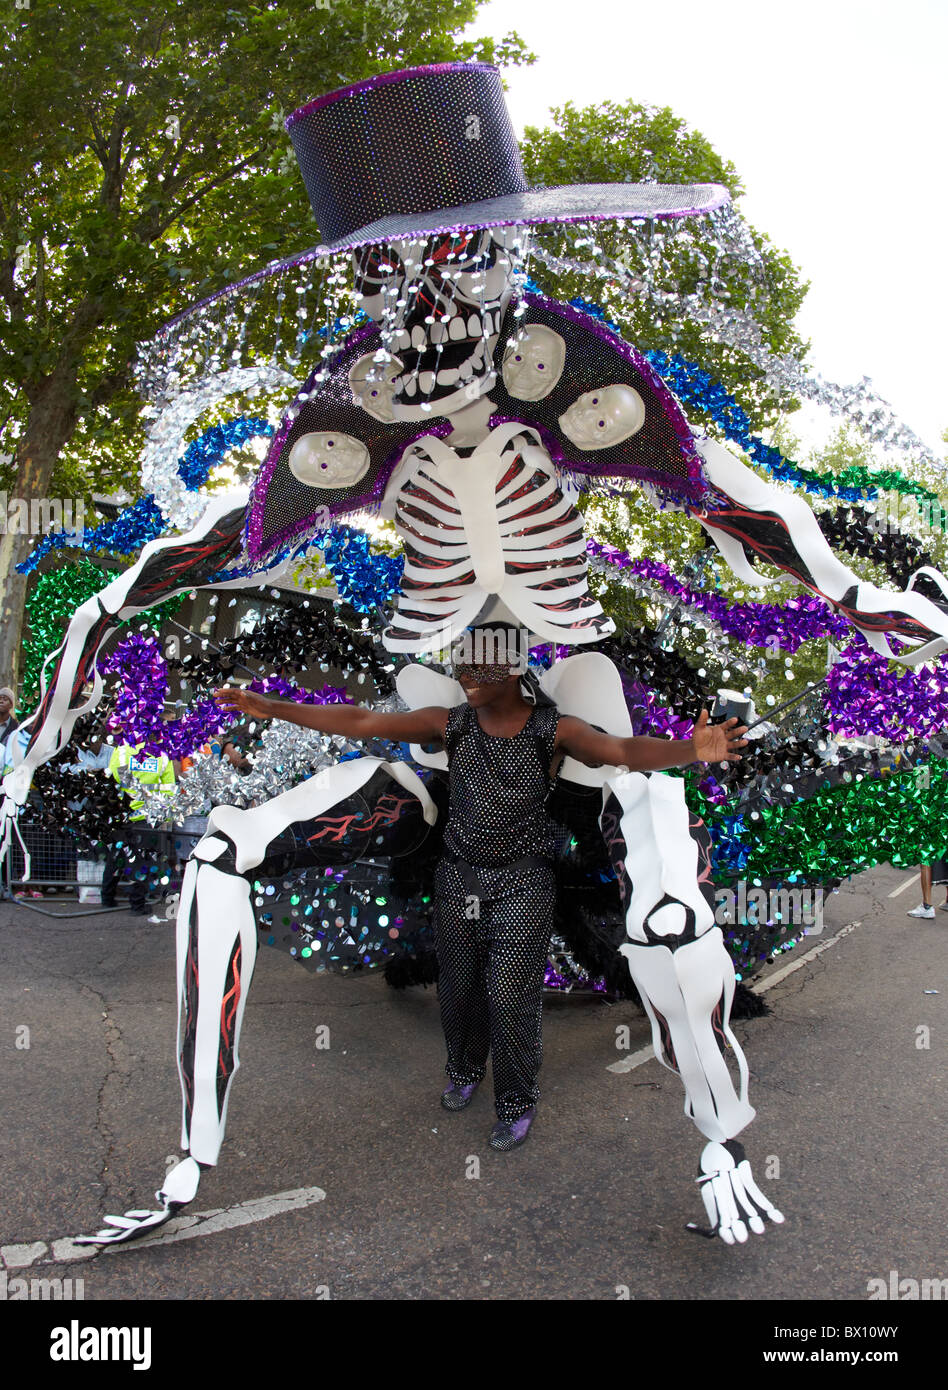 Giant Skeleton Costume At The Notting Hill Carnival London UK Stock Photo